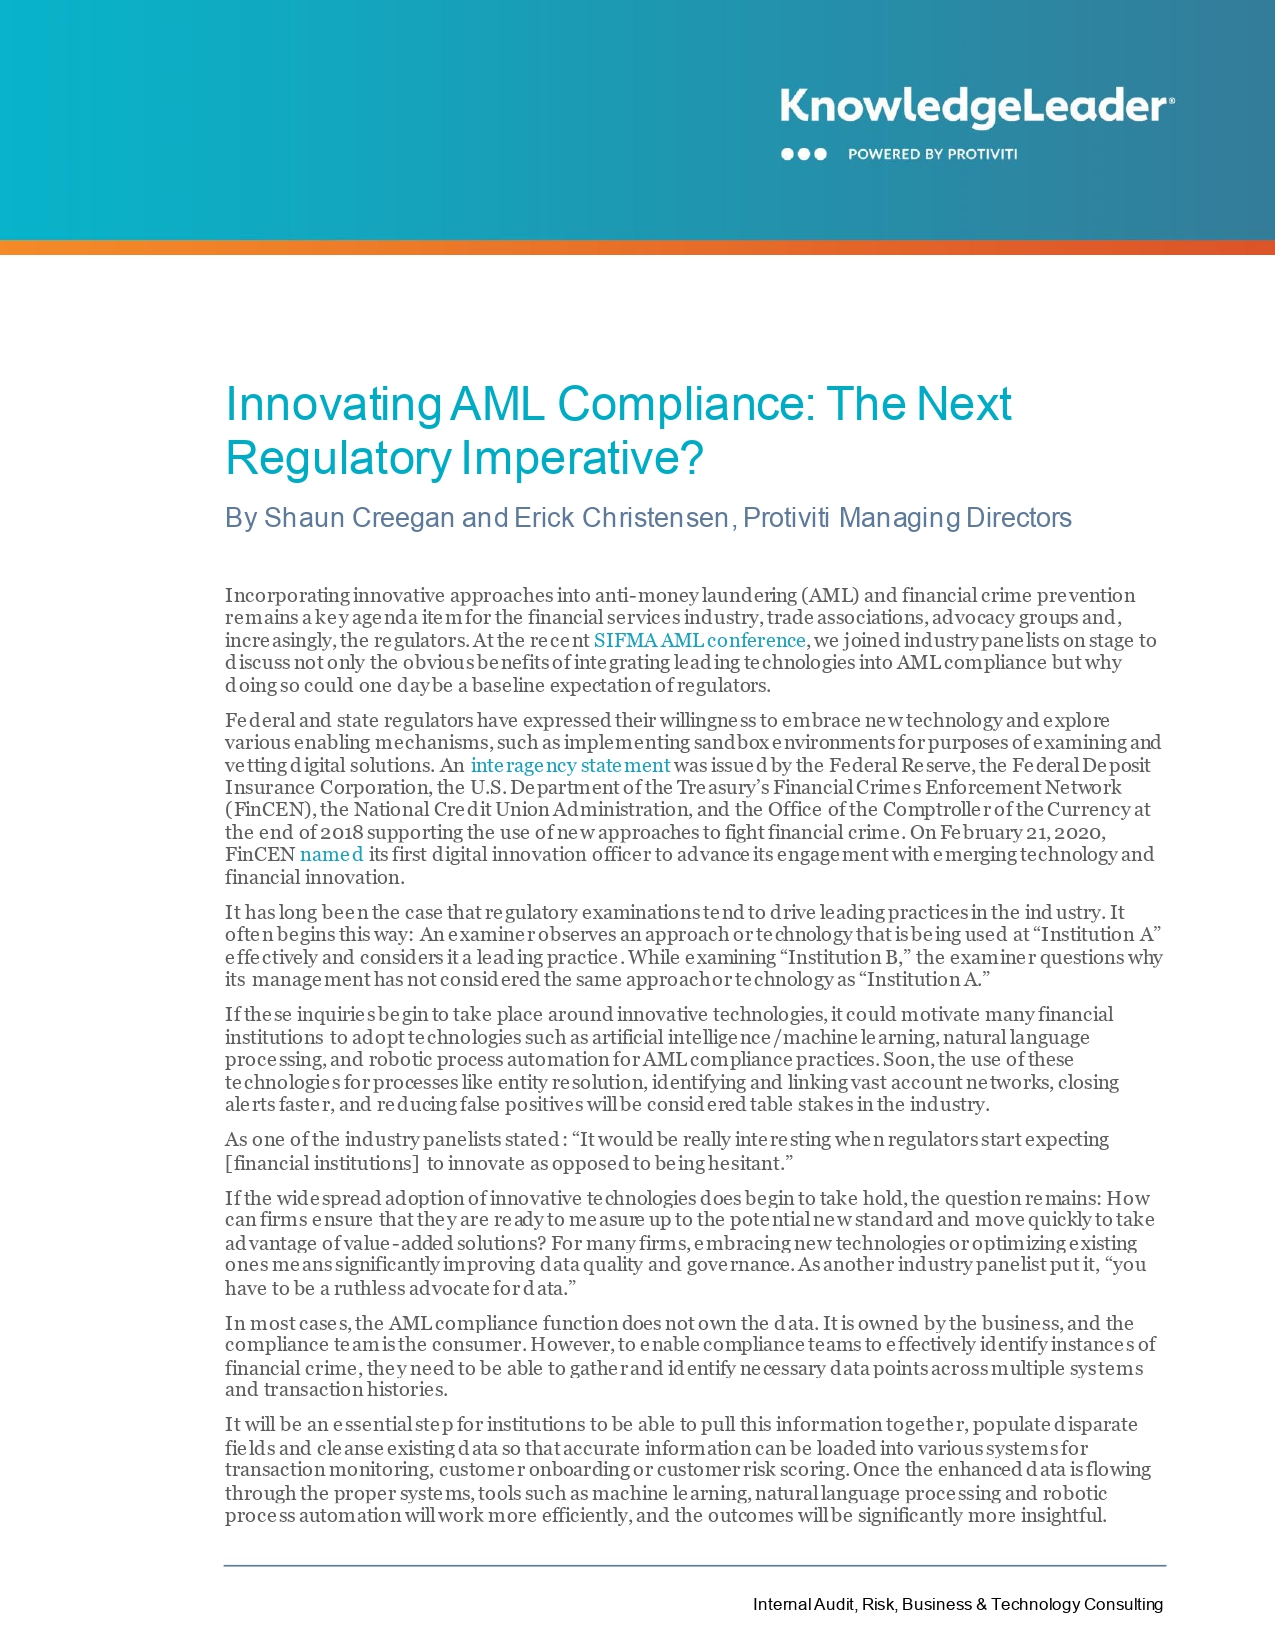 Innovating AML Compliance The Next Regulatory Imperative